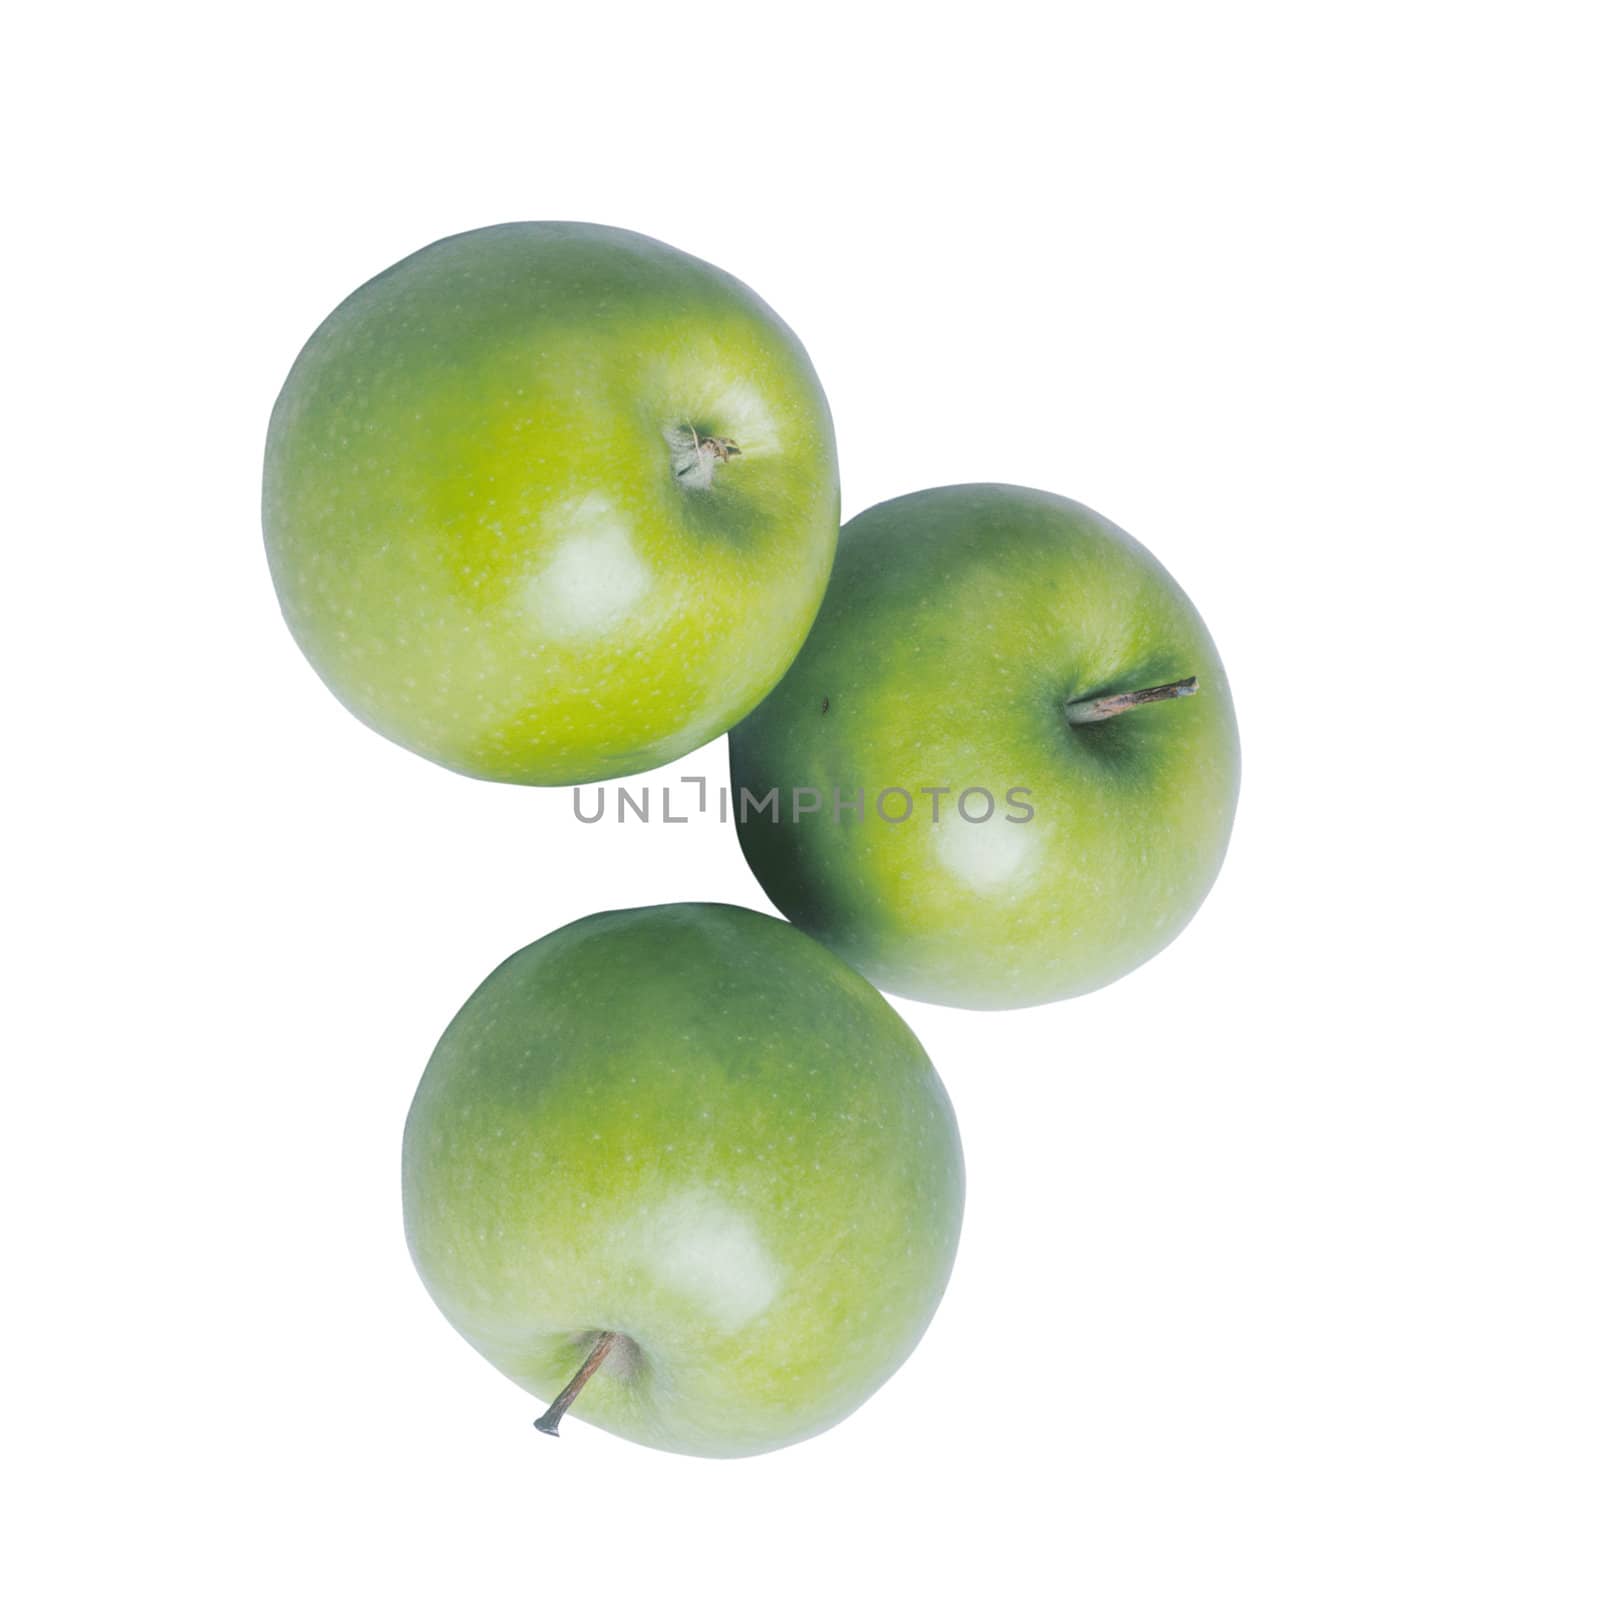 Green apples by Baltus